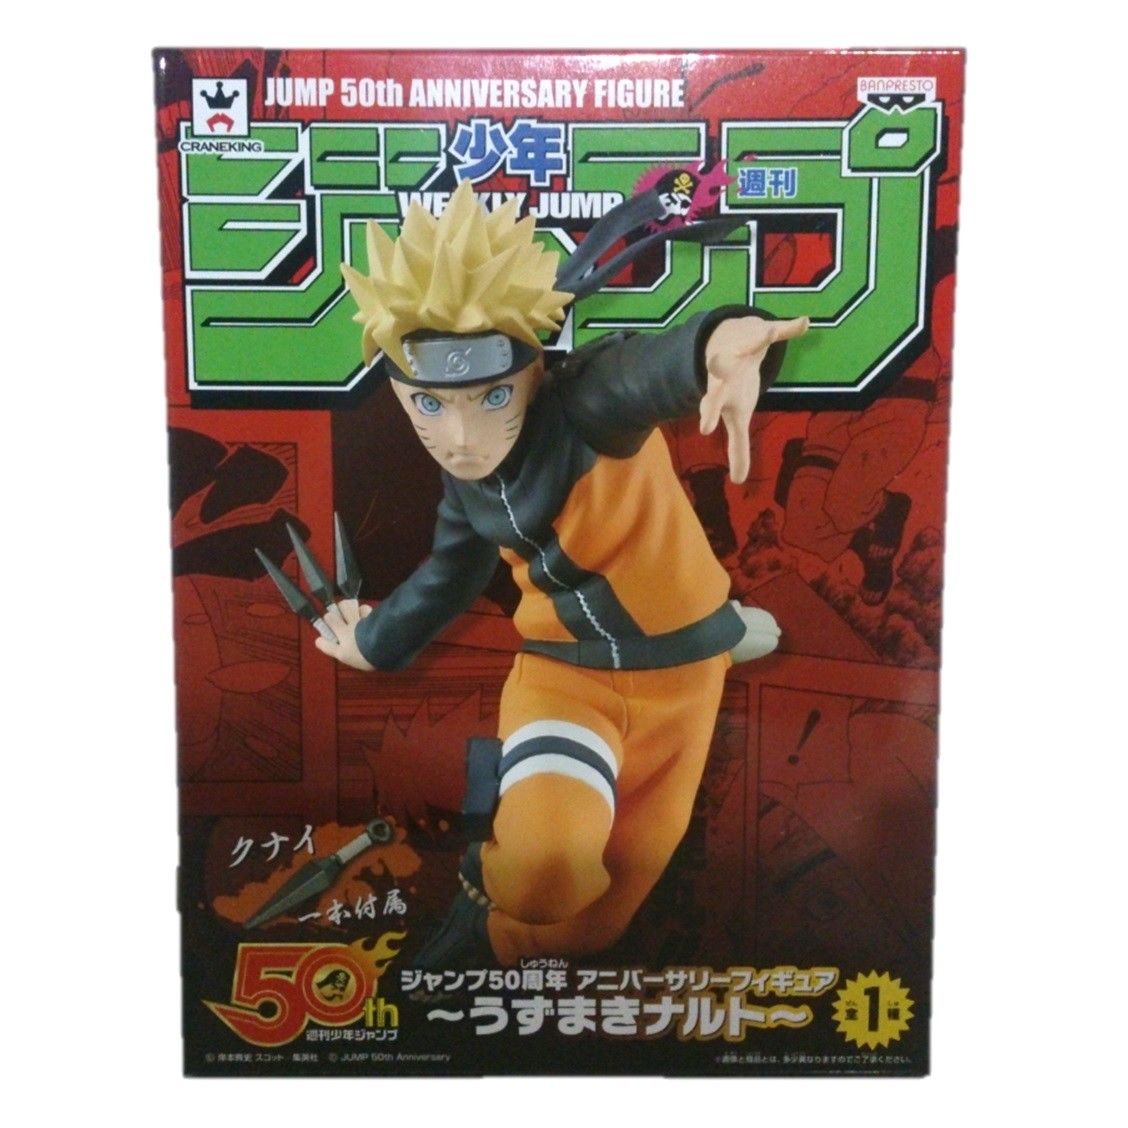 Naruto Uzumaki, Jump 50th Anniversary Figure, Naruto, Banpresto